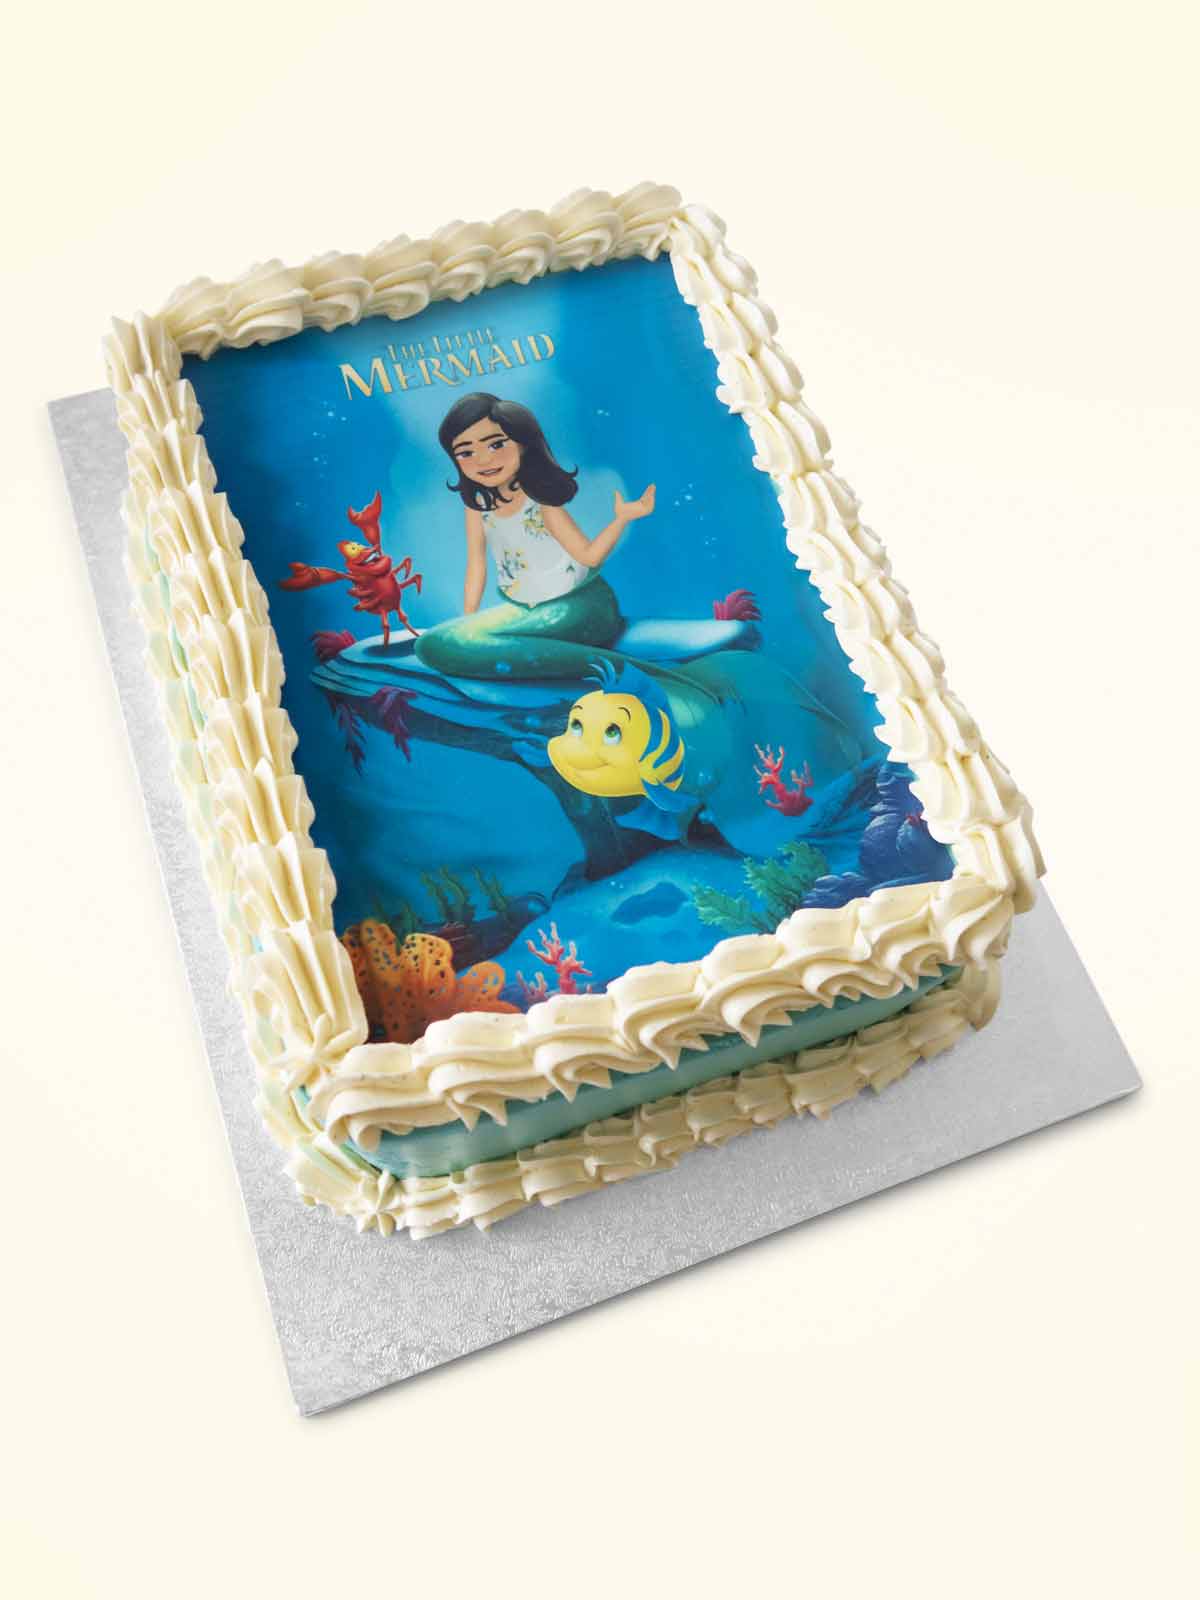 Personalised Little Mermaid Birthday Cake Delivered in London, Surrey, Berkshire